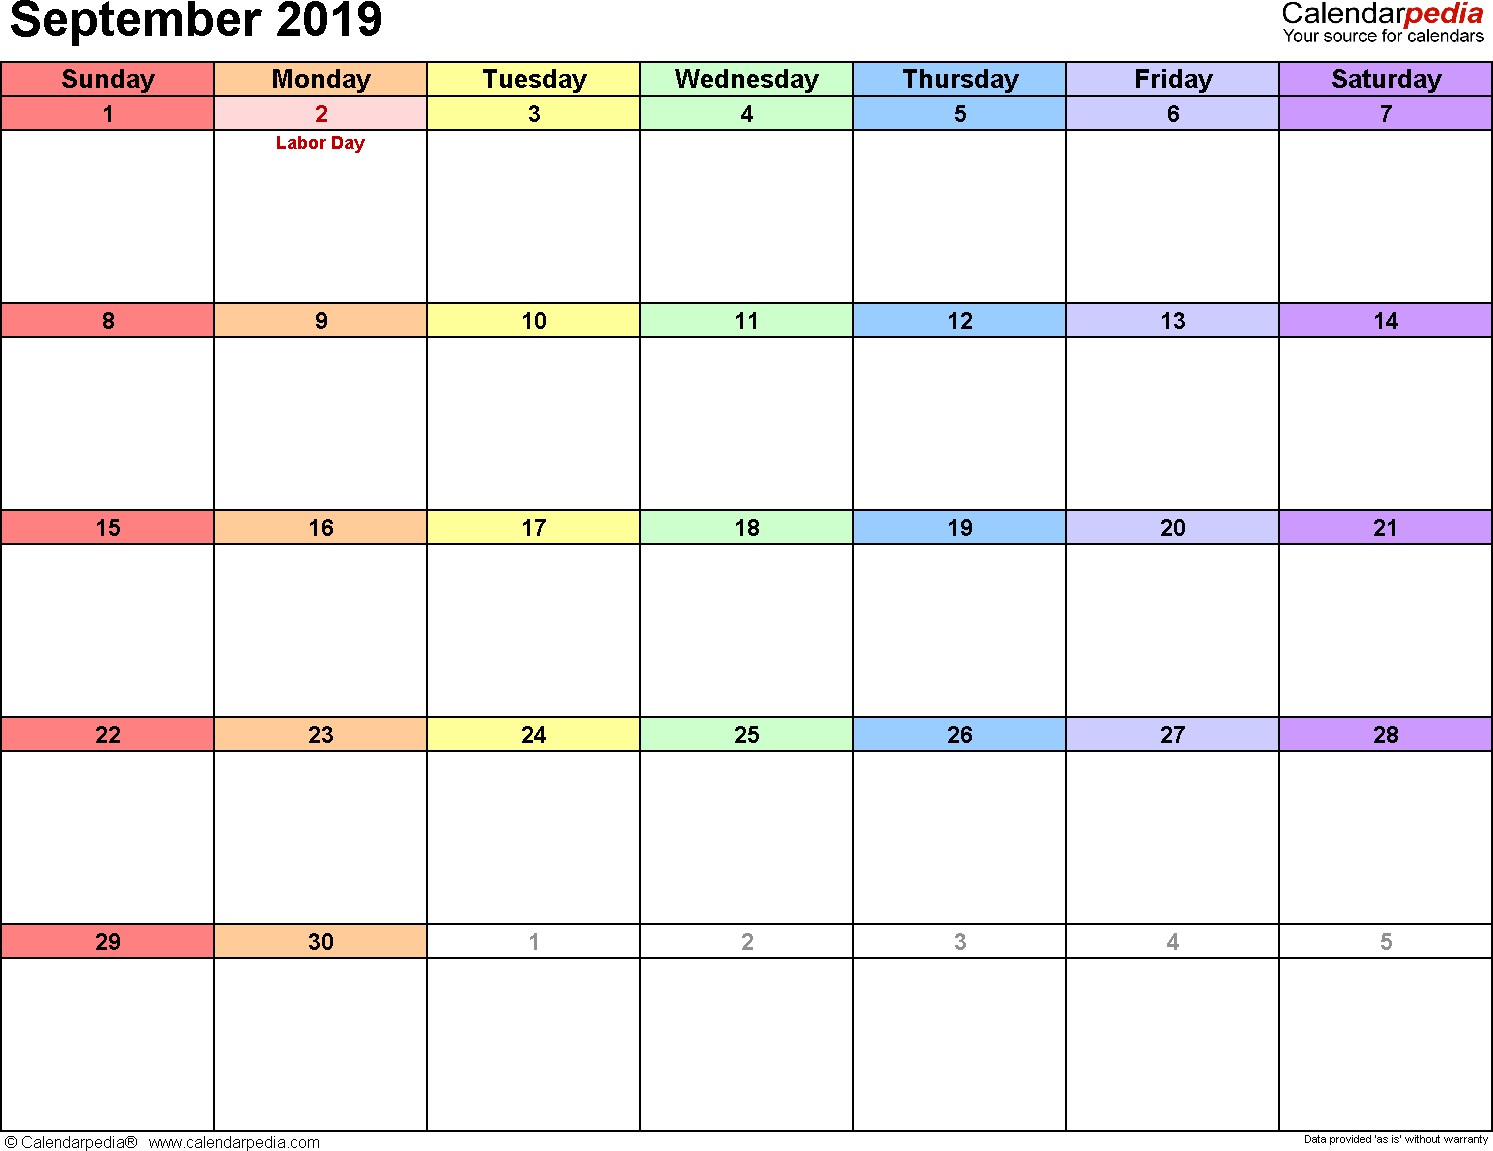 September 2019 Calendars for Word Excel & PDF